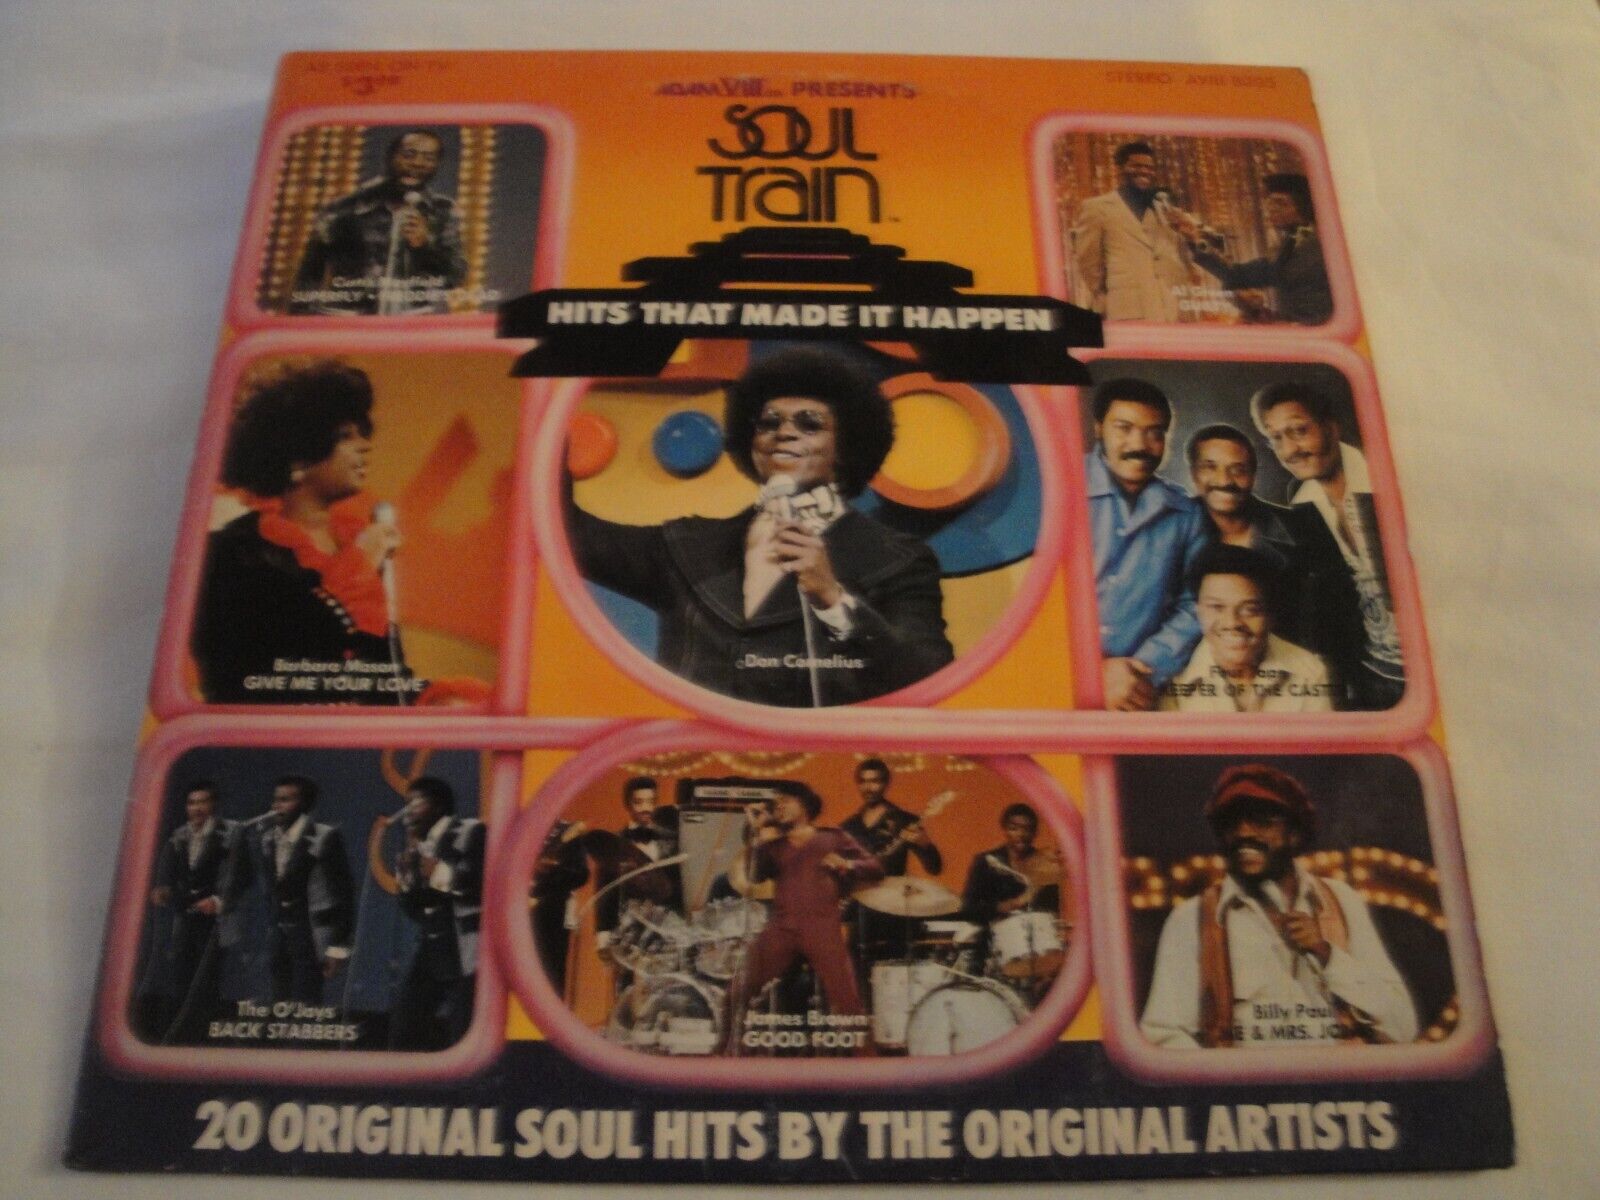 Soul Train Hits That Made It Happen Vinyl Record LP Album 1973 ADAM VIII